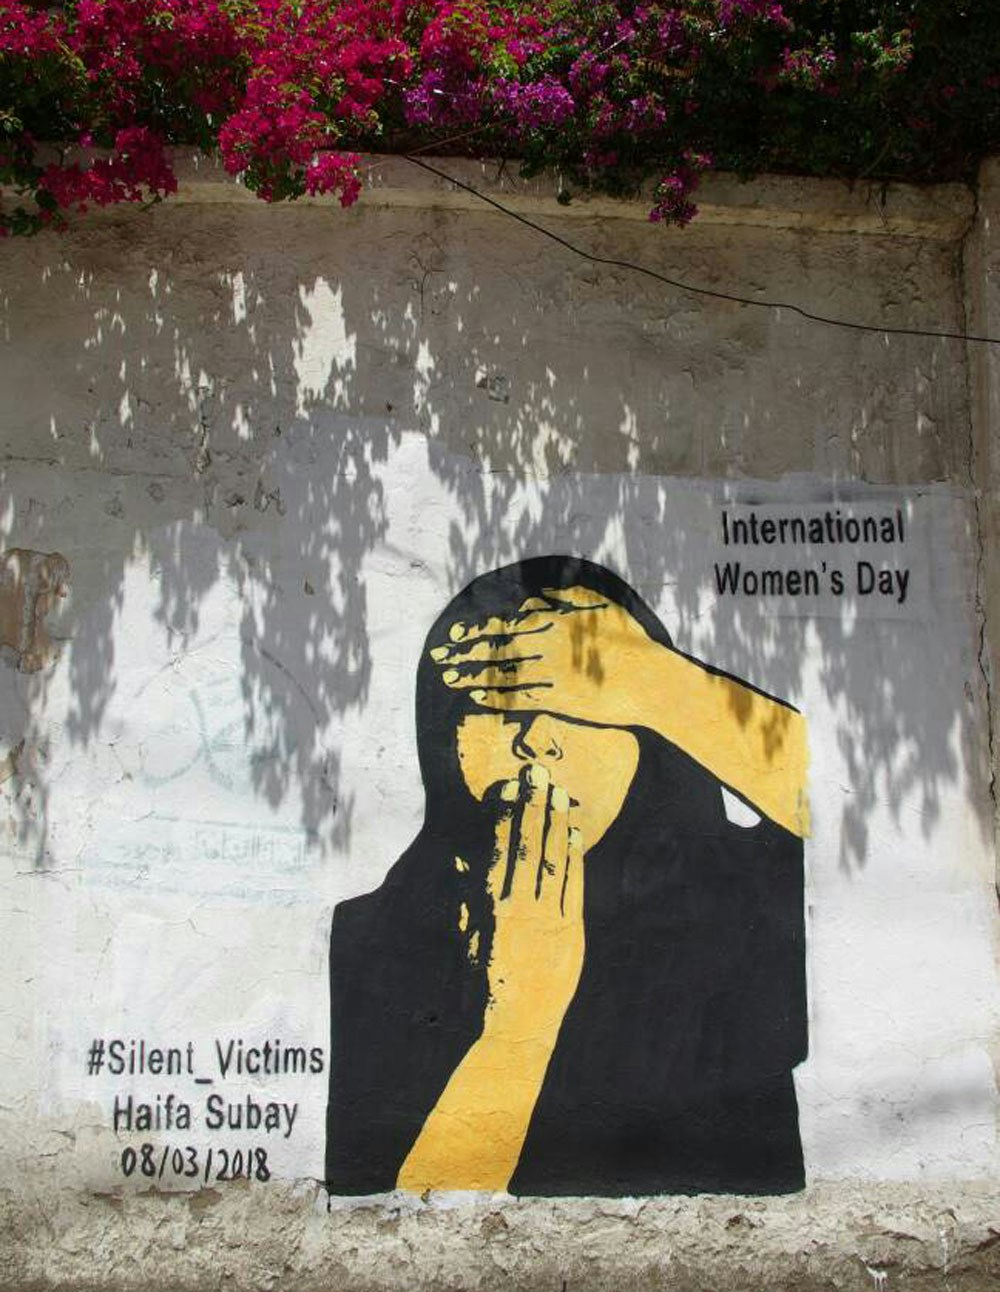 A mural by street artist Haifa Subay in Sana’a, Yemen, celebrates International Women’s Day. Photo: Haifa Subay